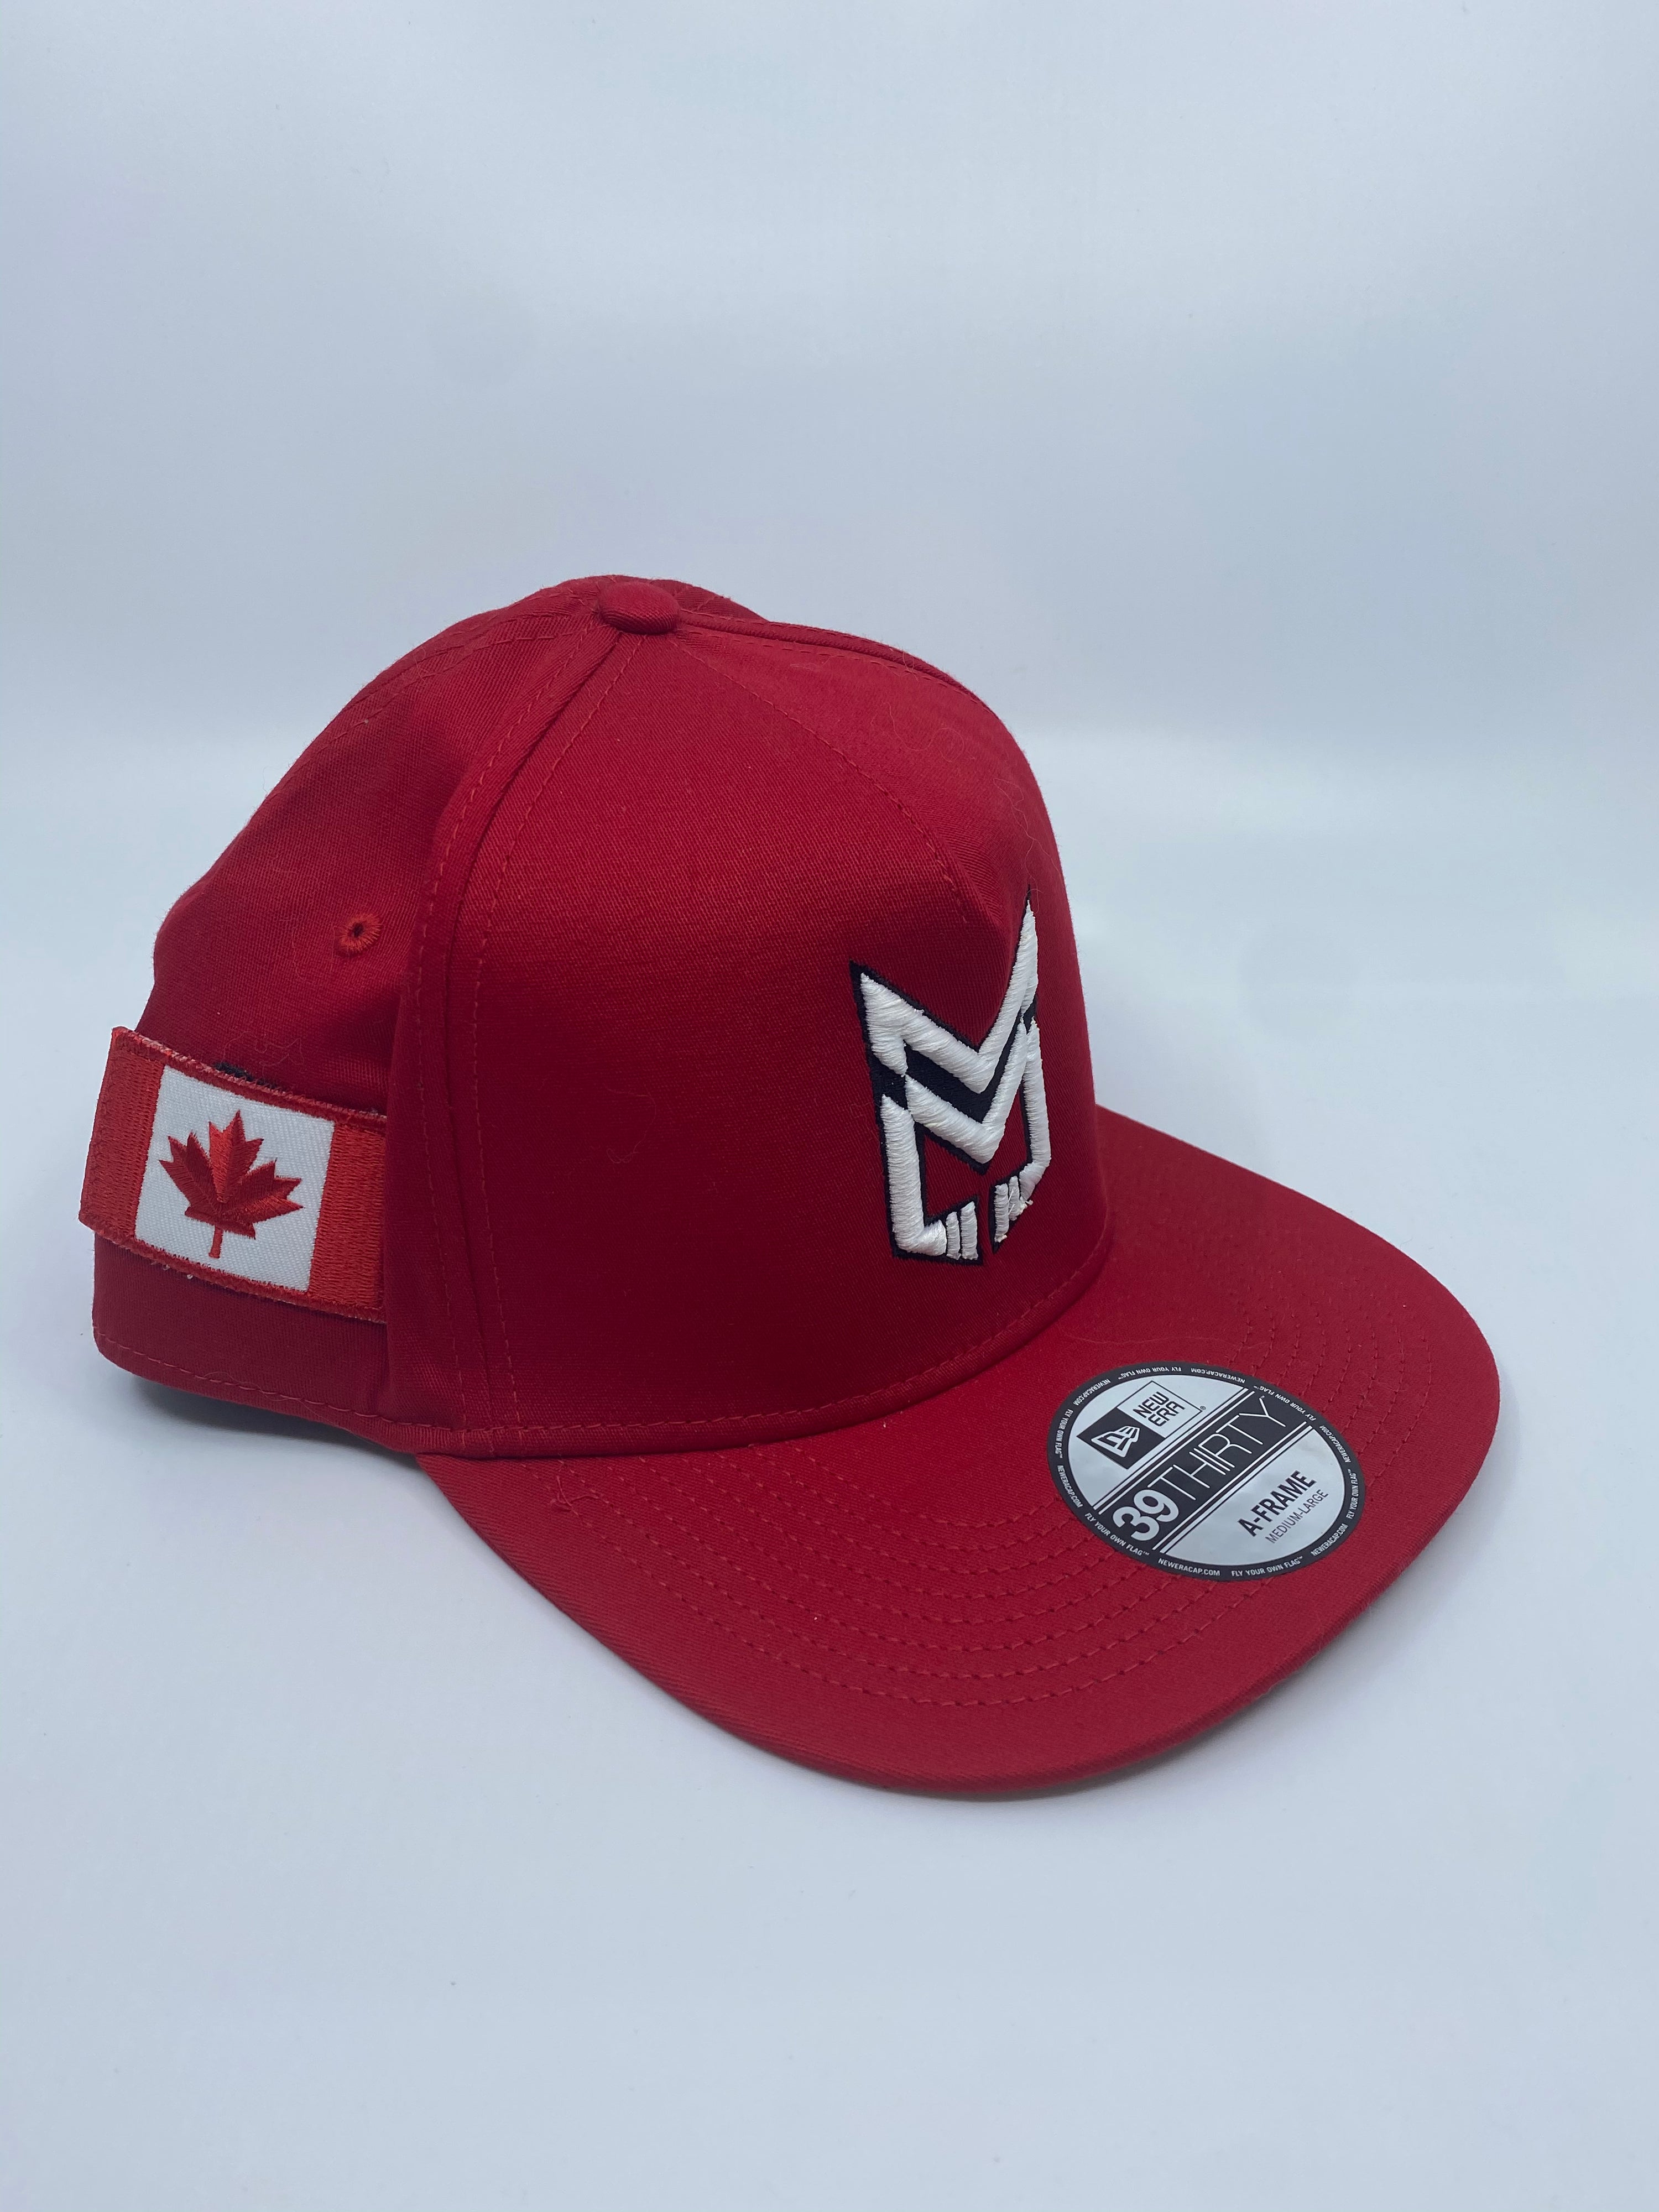 Marner Red MM New Era Hat